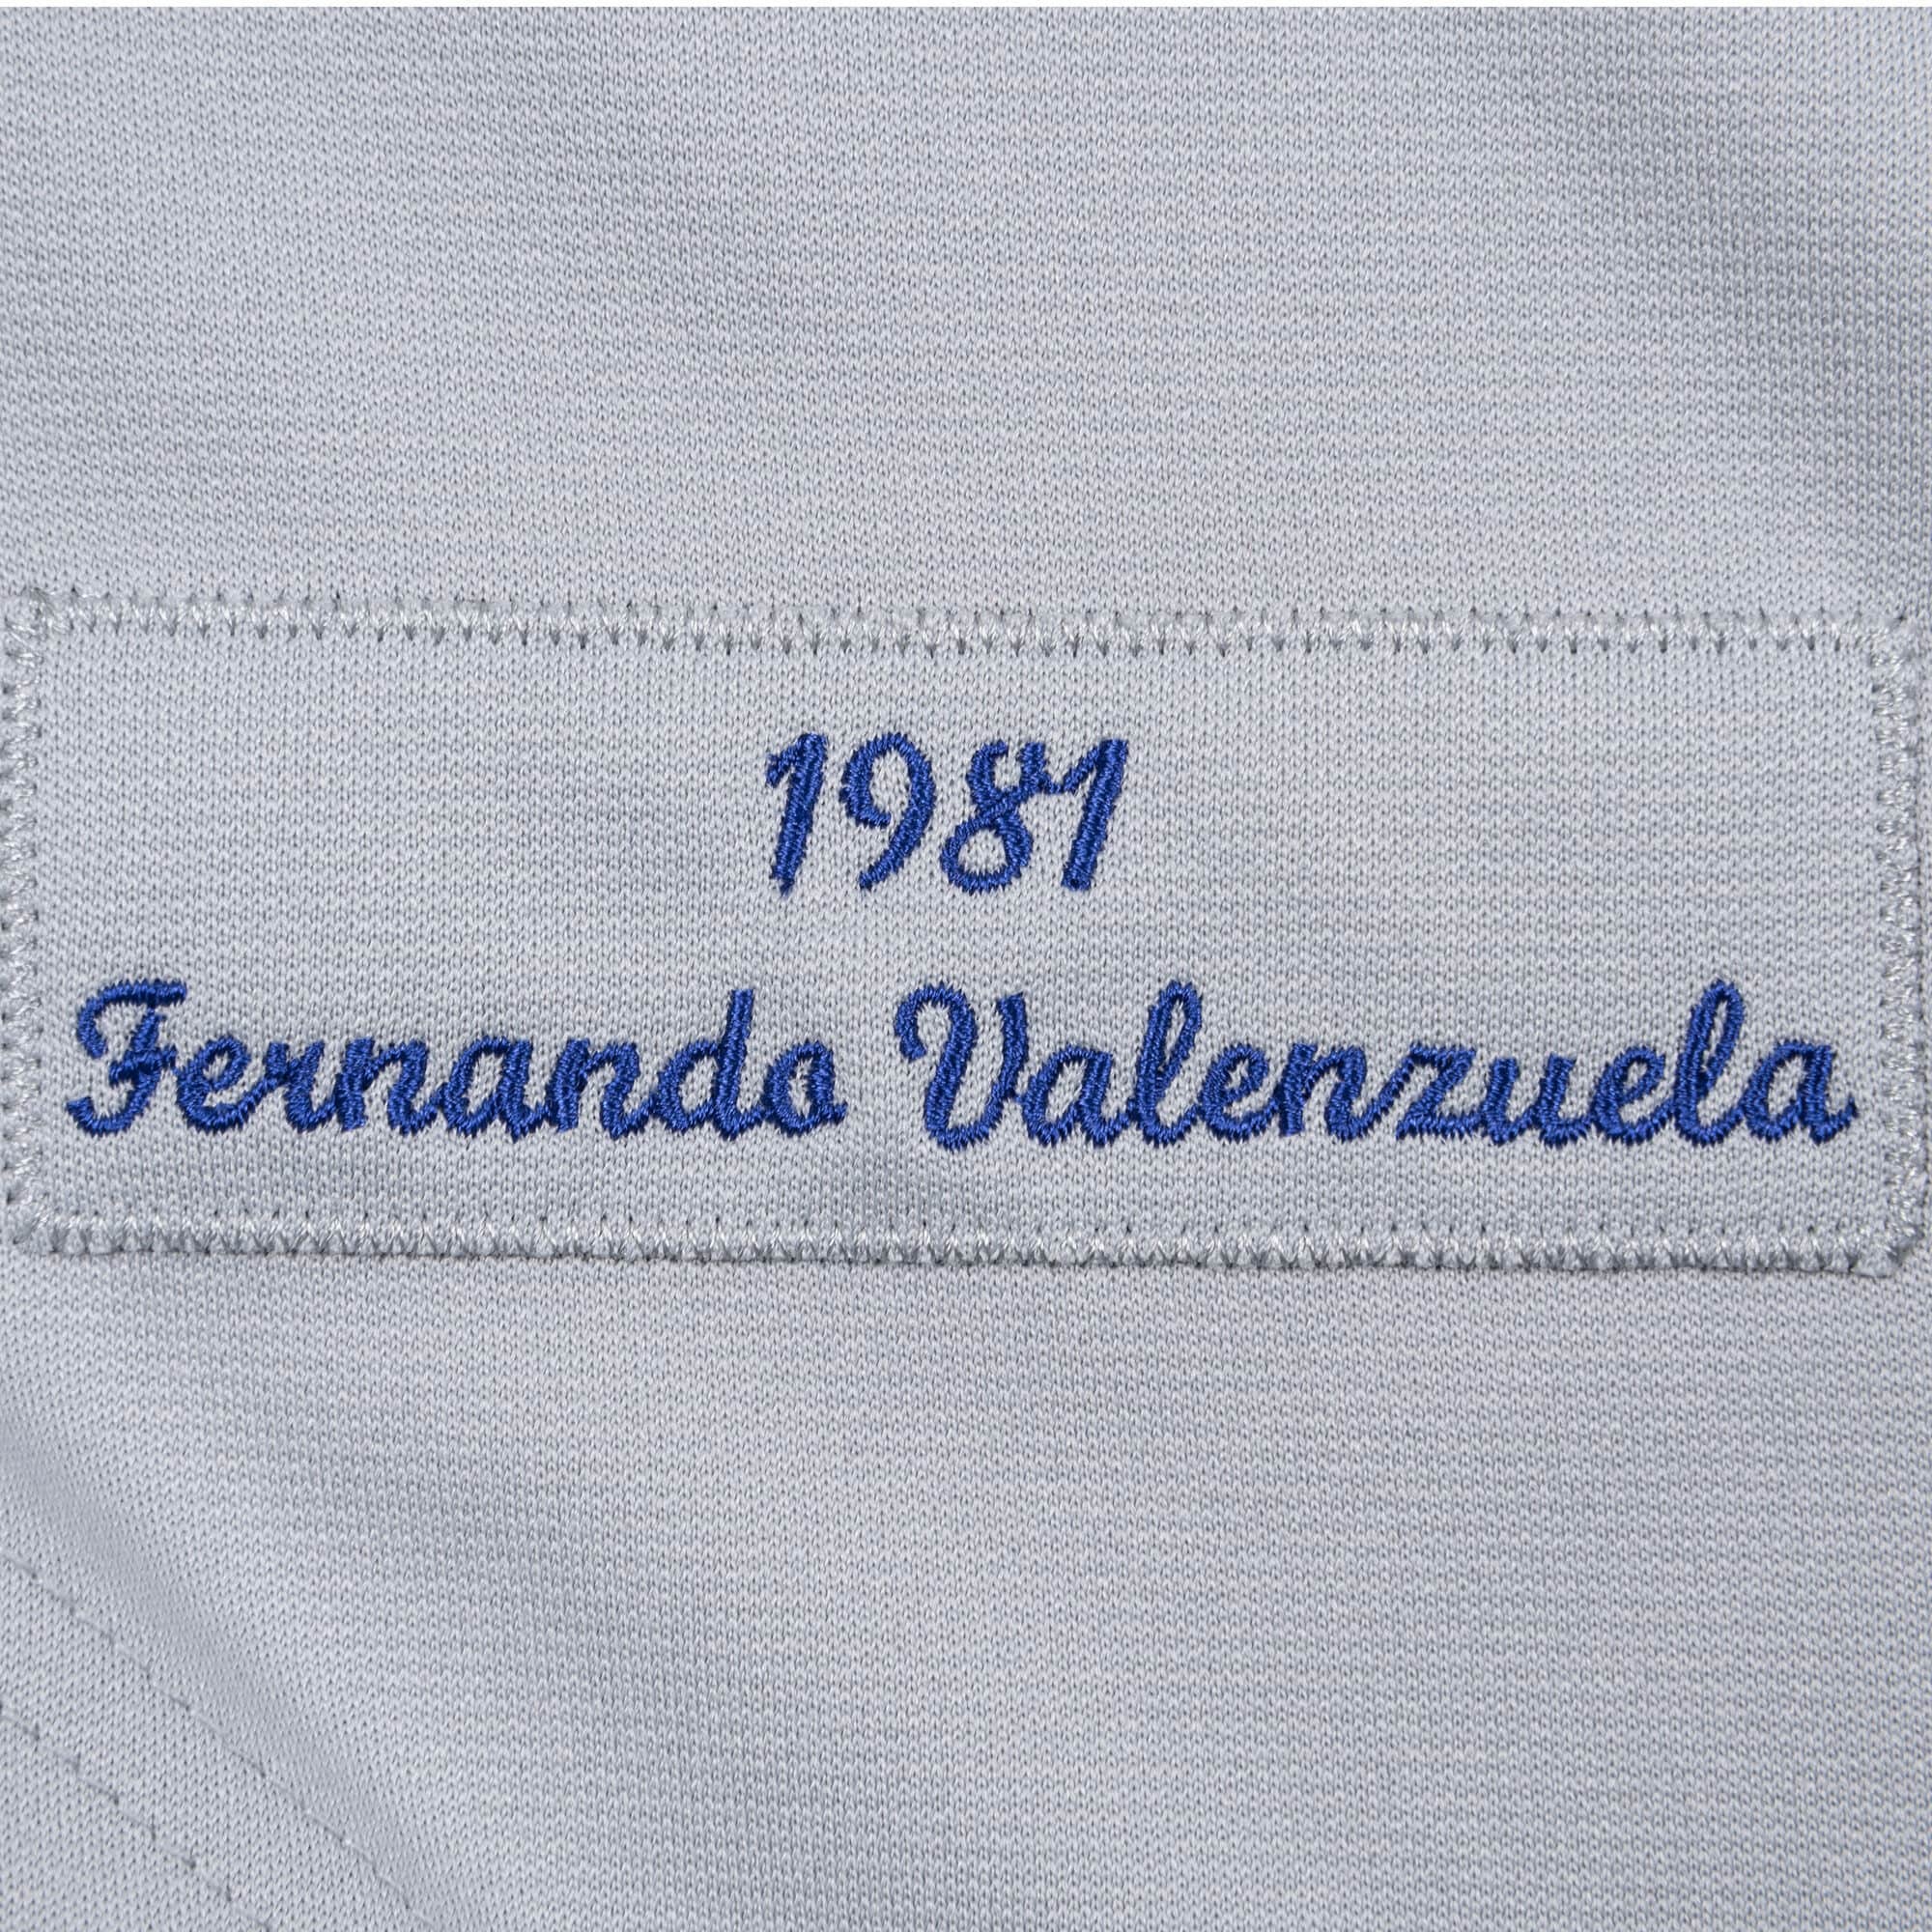 Fernando Valenzuela Jersey Los Angeles Dodgers 1981 World 